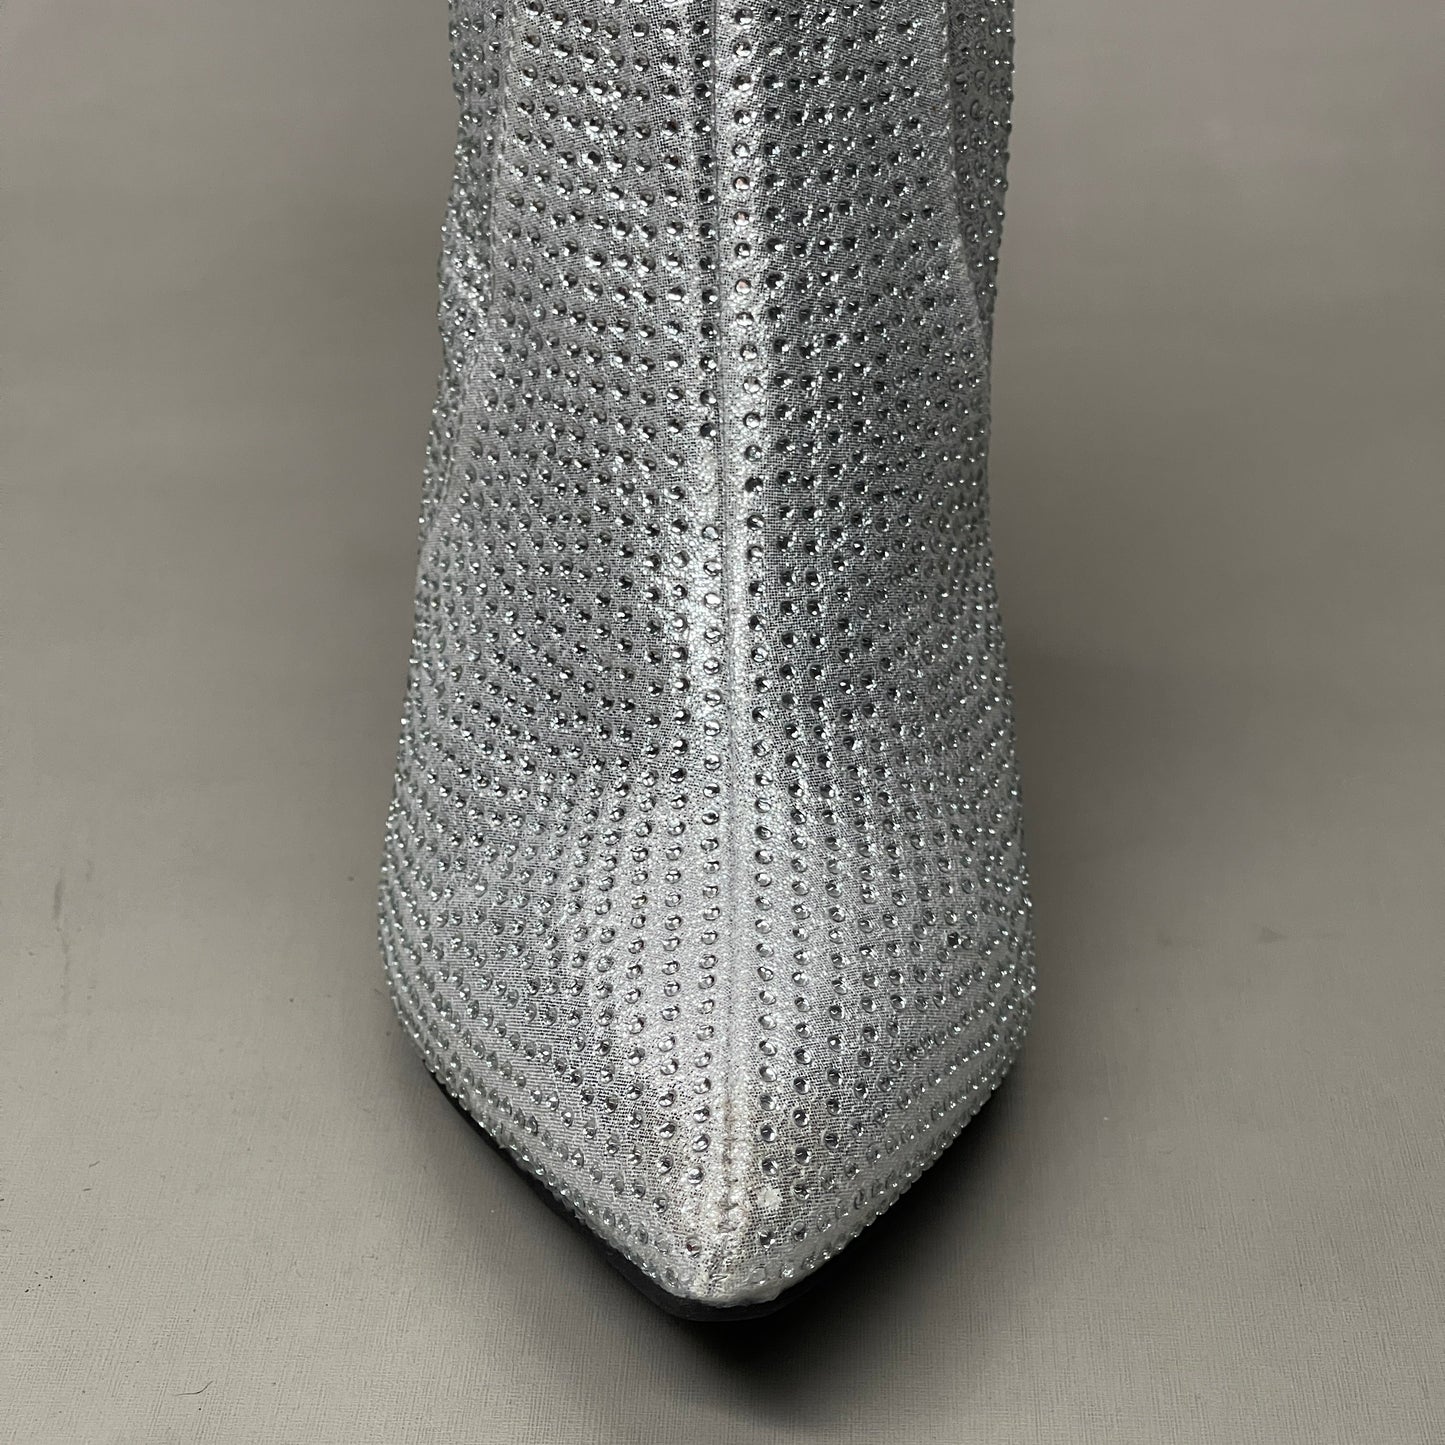 MIA Mackynzie Silver Stone Tall Heeled Boots Sz 11M Q100302